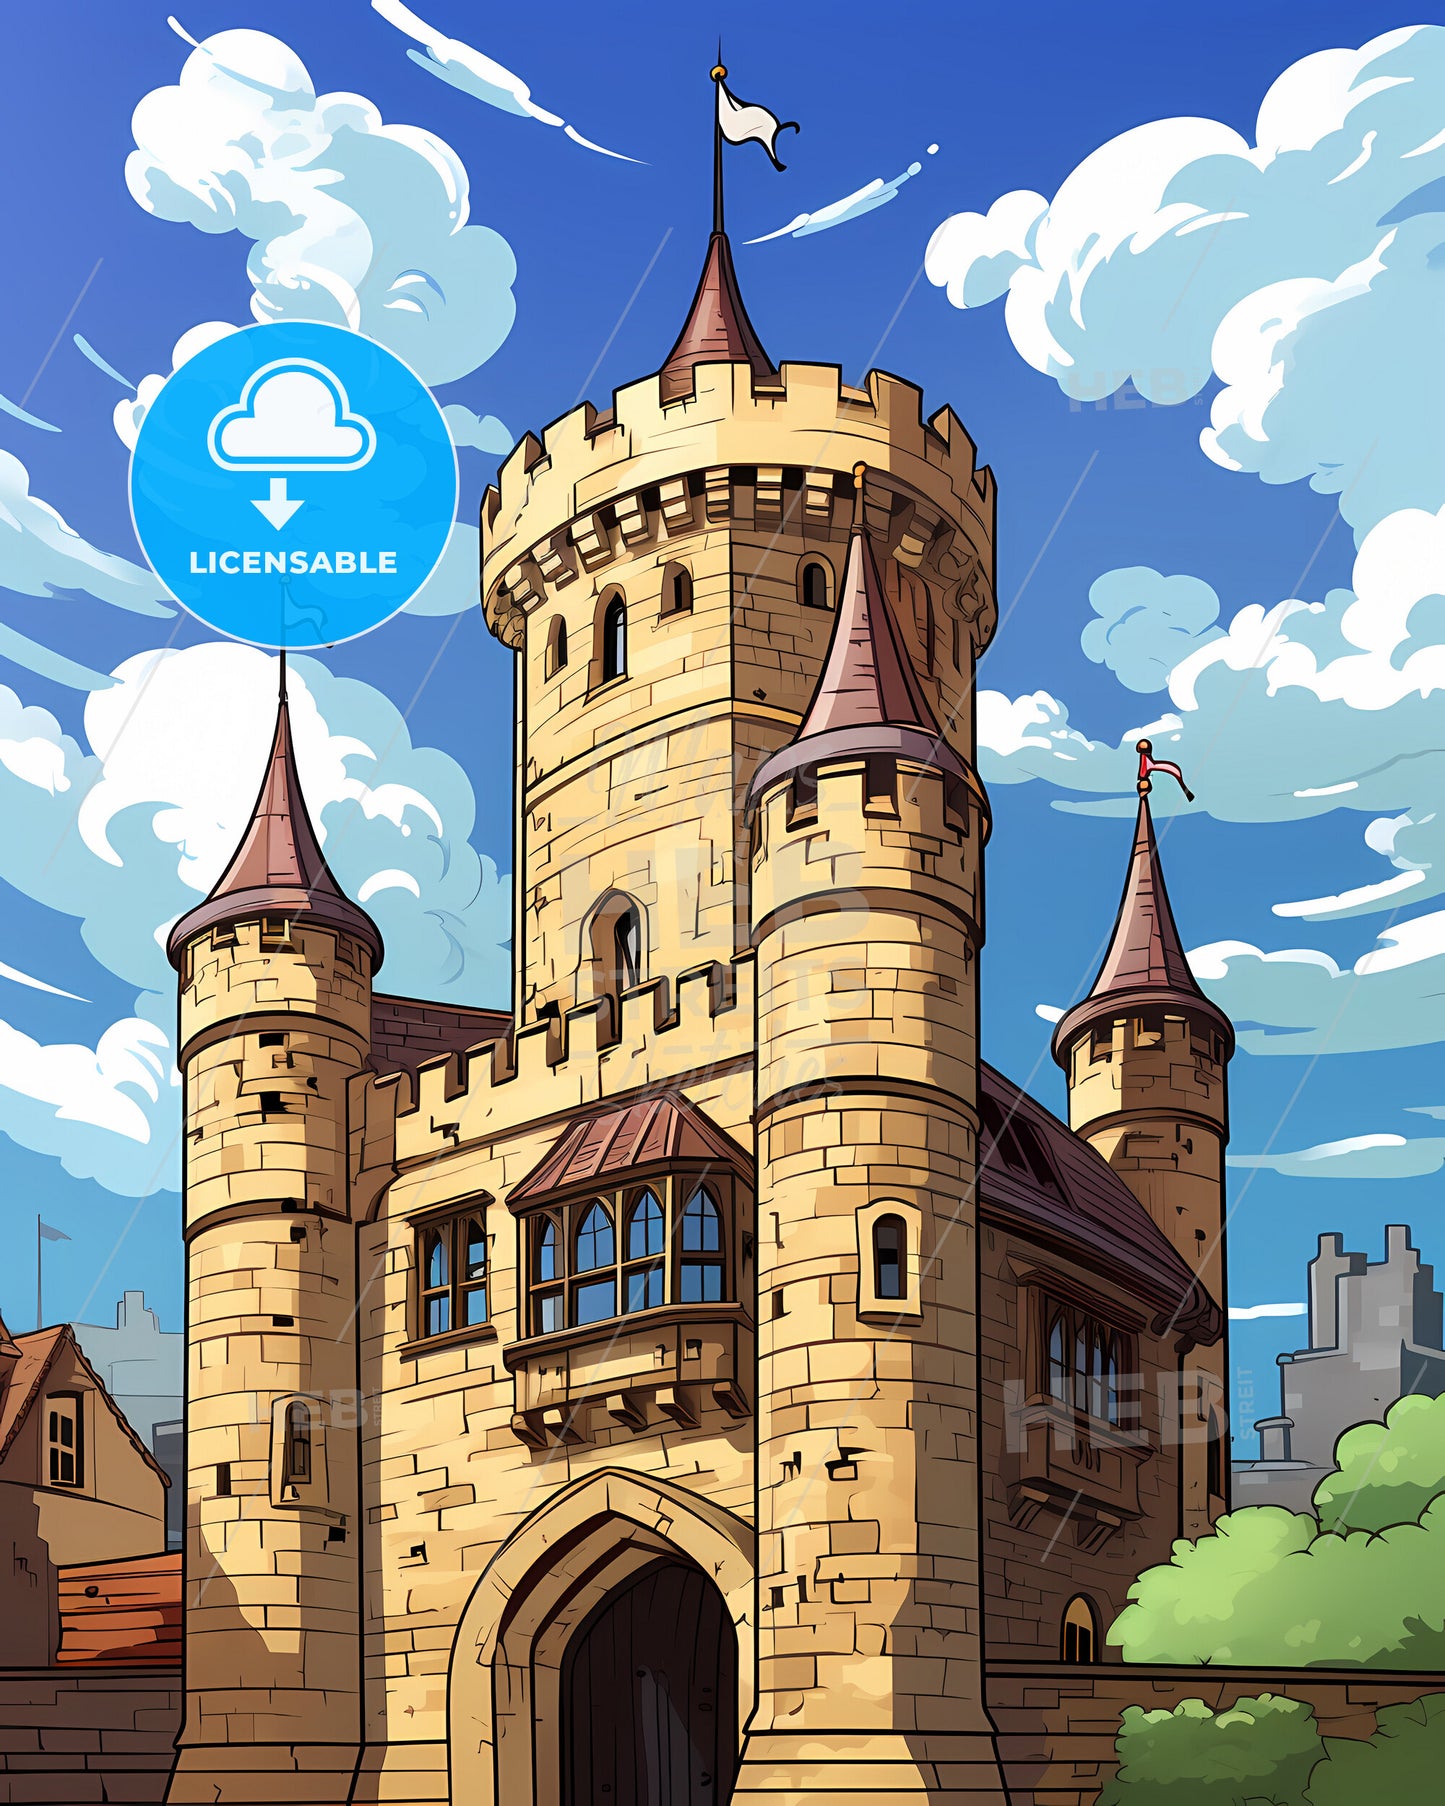 Skokie, Illinois, a cartoon of a castle